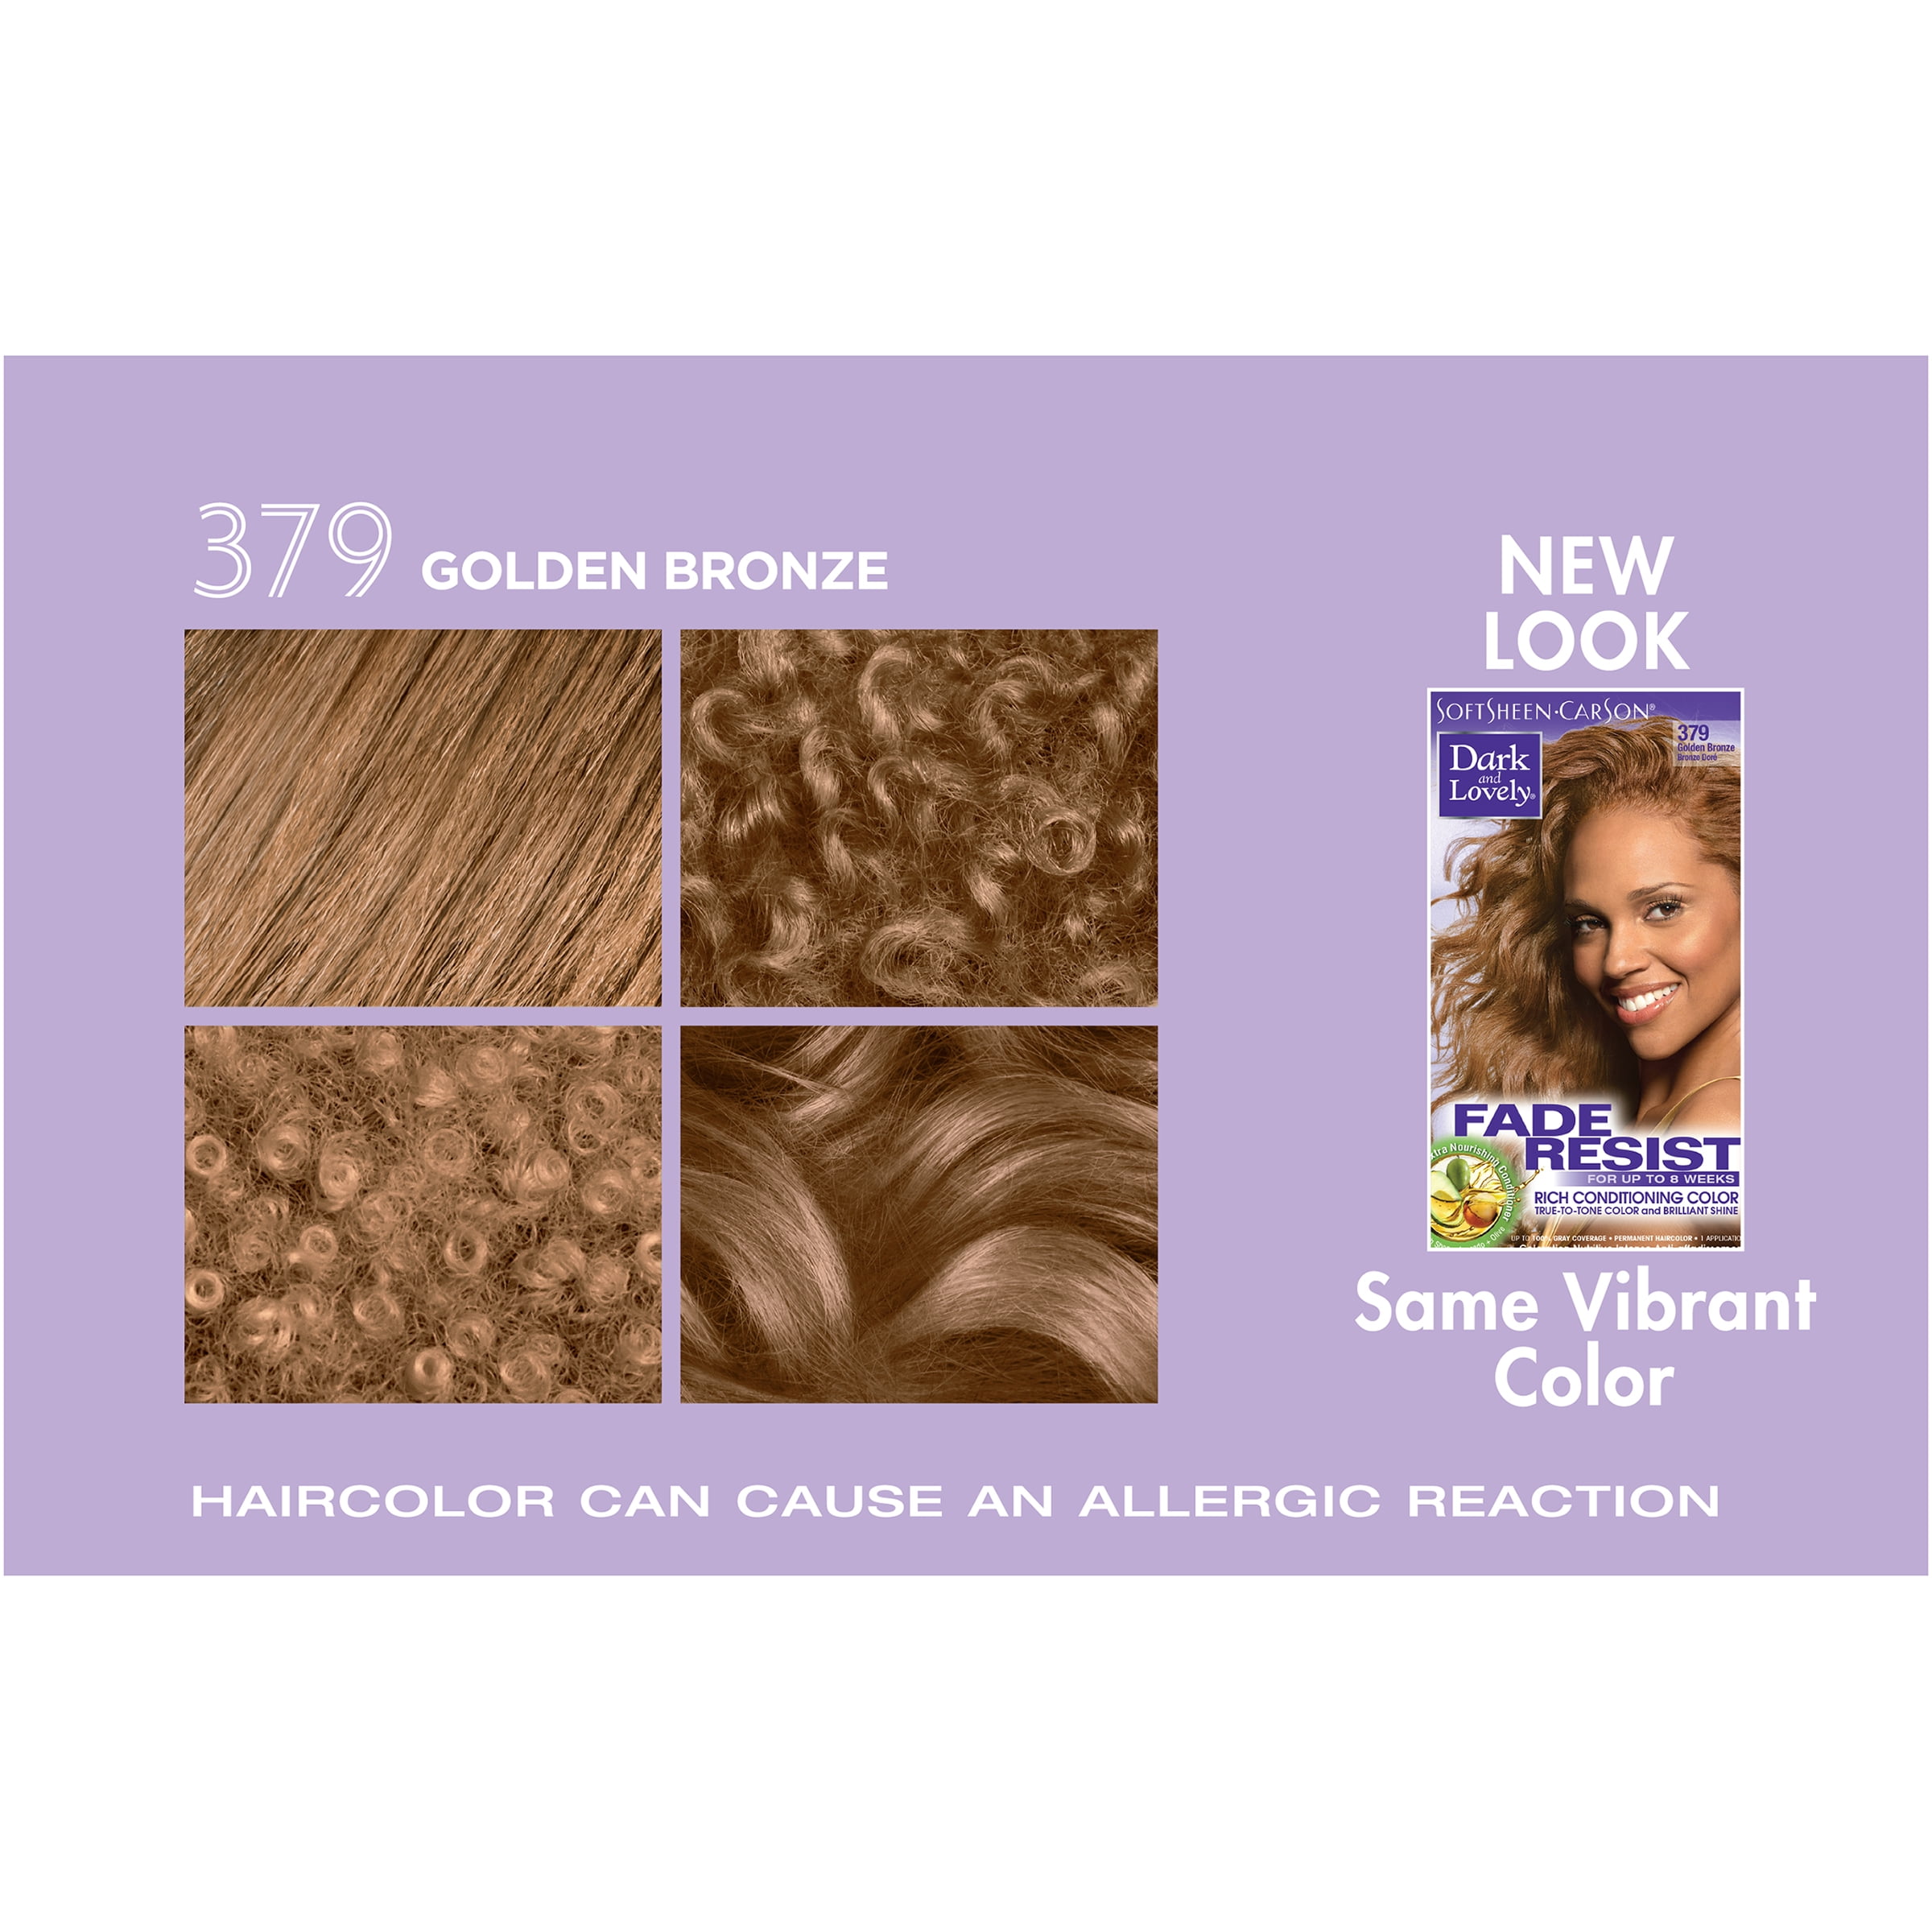 Softsheen Carson Dark And Lovely Fade Resist Rich Conditioning Hair Color Permanent Dye 379 Golden Bronze Walmart Com Walmart Com